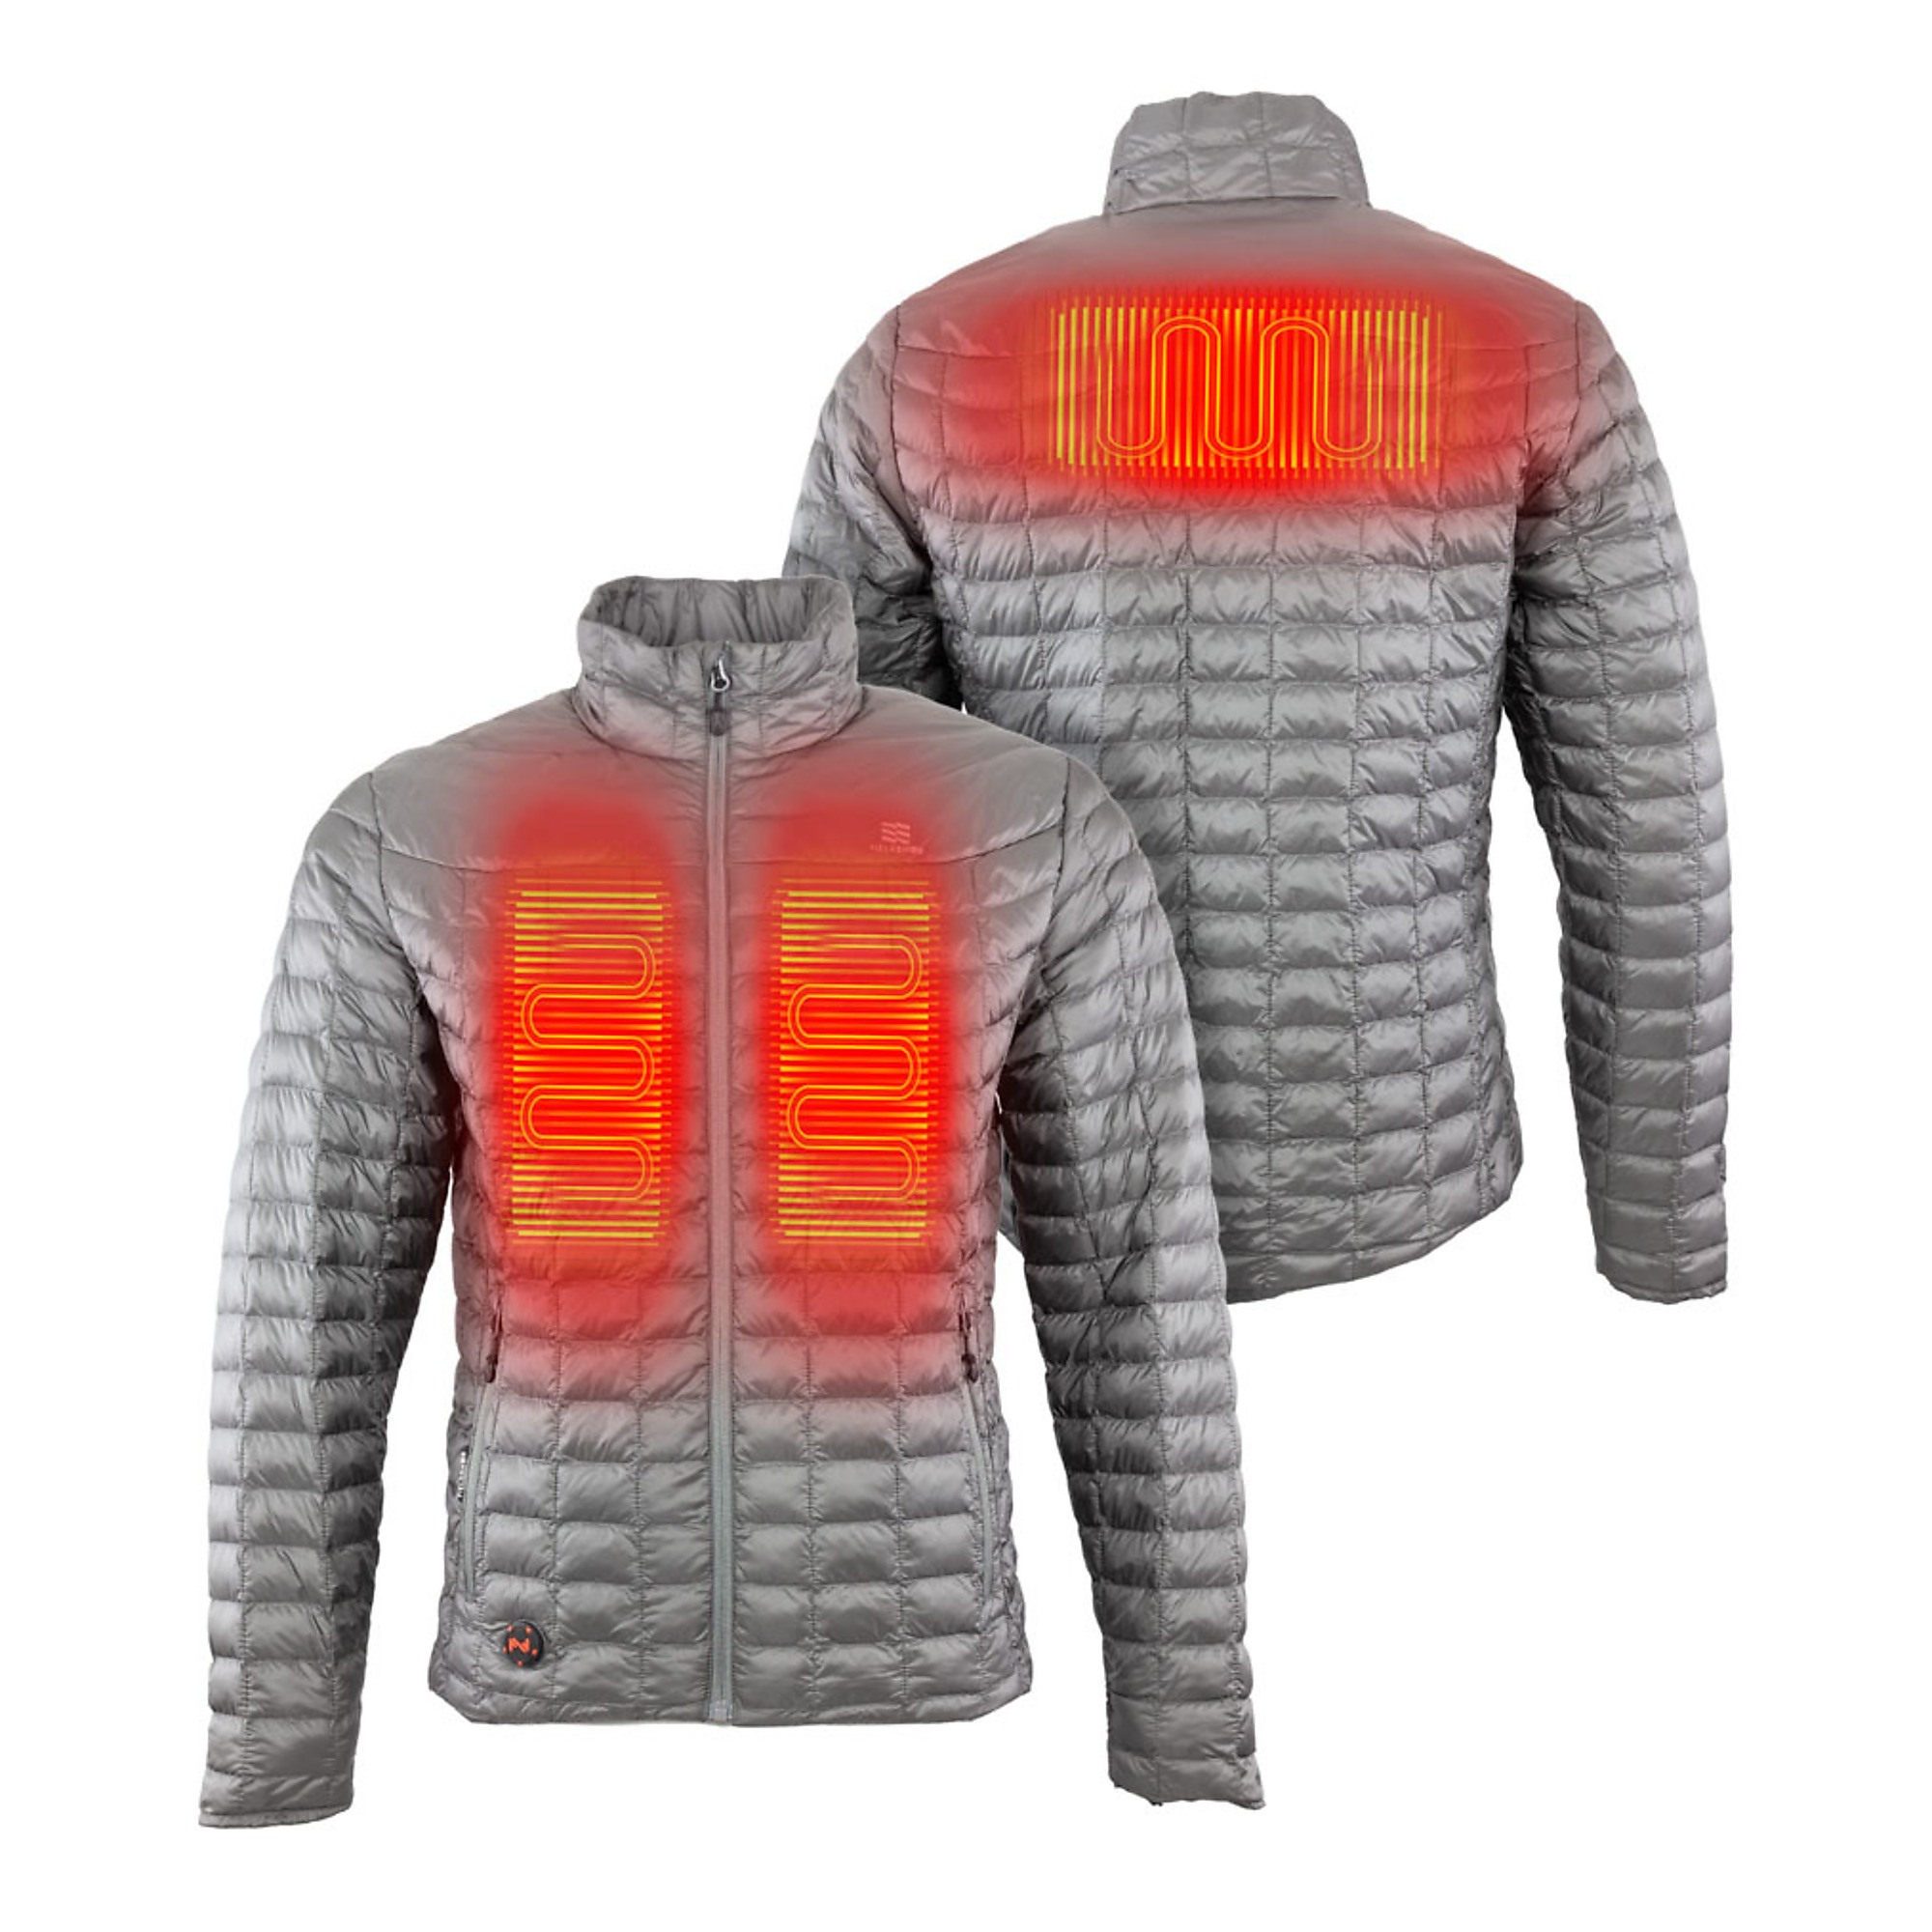 Fieldsheer, Men's Backcountry Heated Jacket with 7.4v Battery, Size 2XL, Color Grey, Model MWMJ04320620